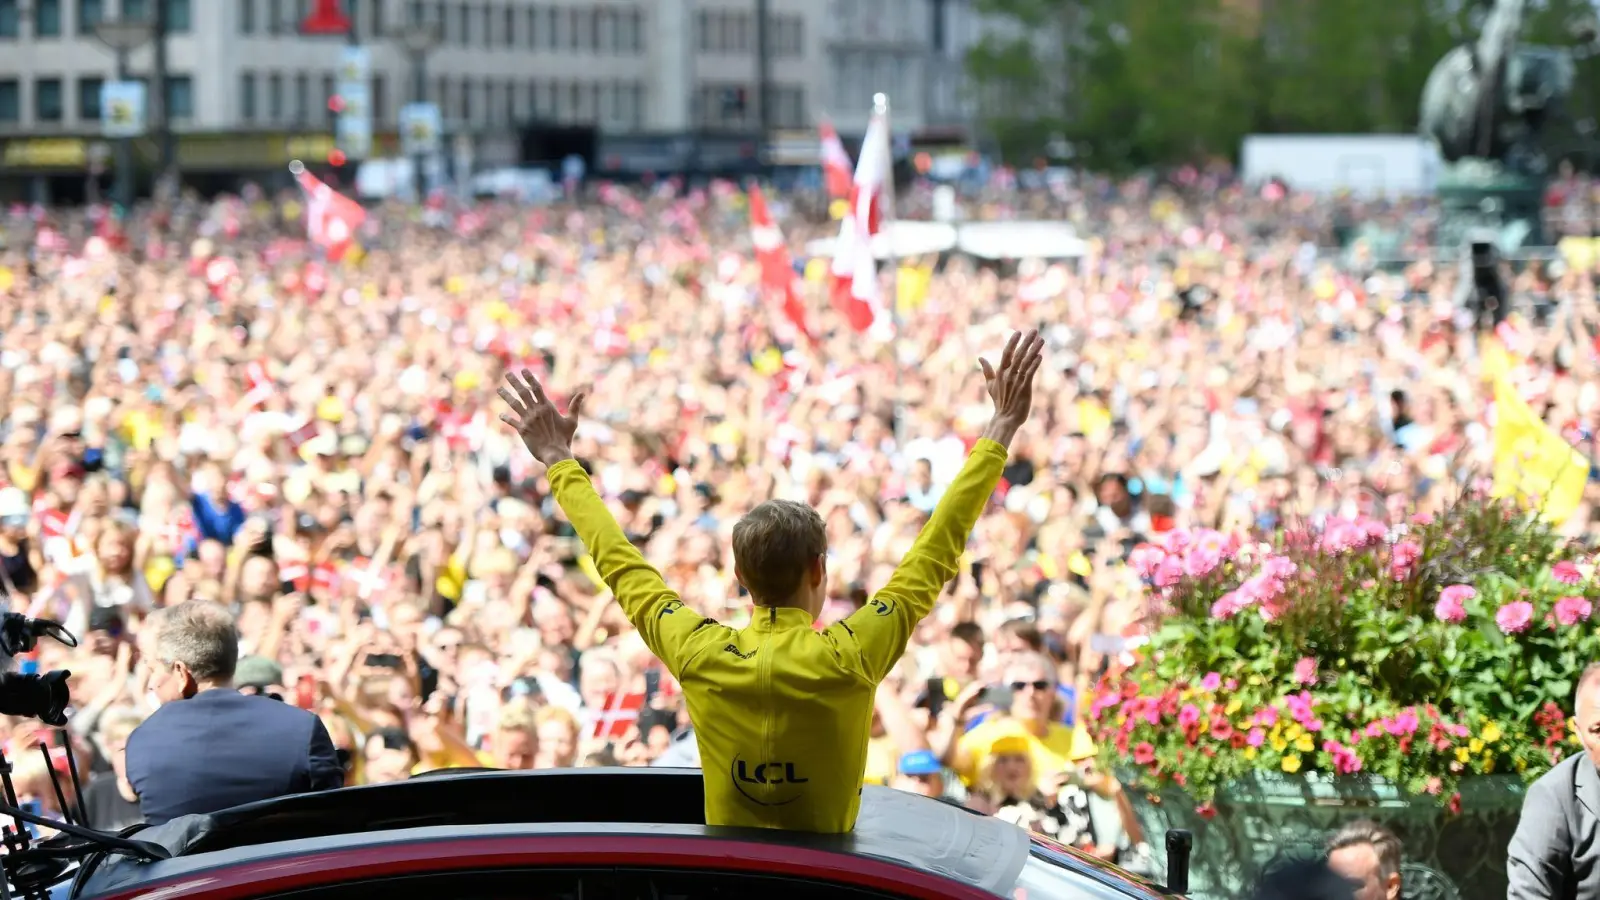 Tour-de-France-Sieger Jonas Vingegaard wird von seinen Fans am Kopenhagener Rathaus empfangen. (Foto: Thomas Sjoerup/Ritzau Scanpix Foto/AP/dpa)